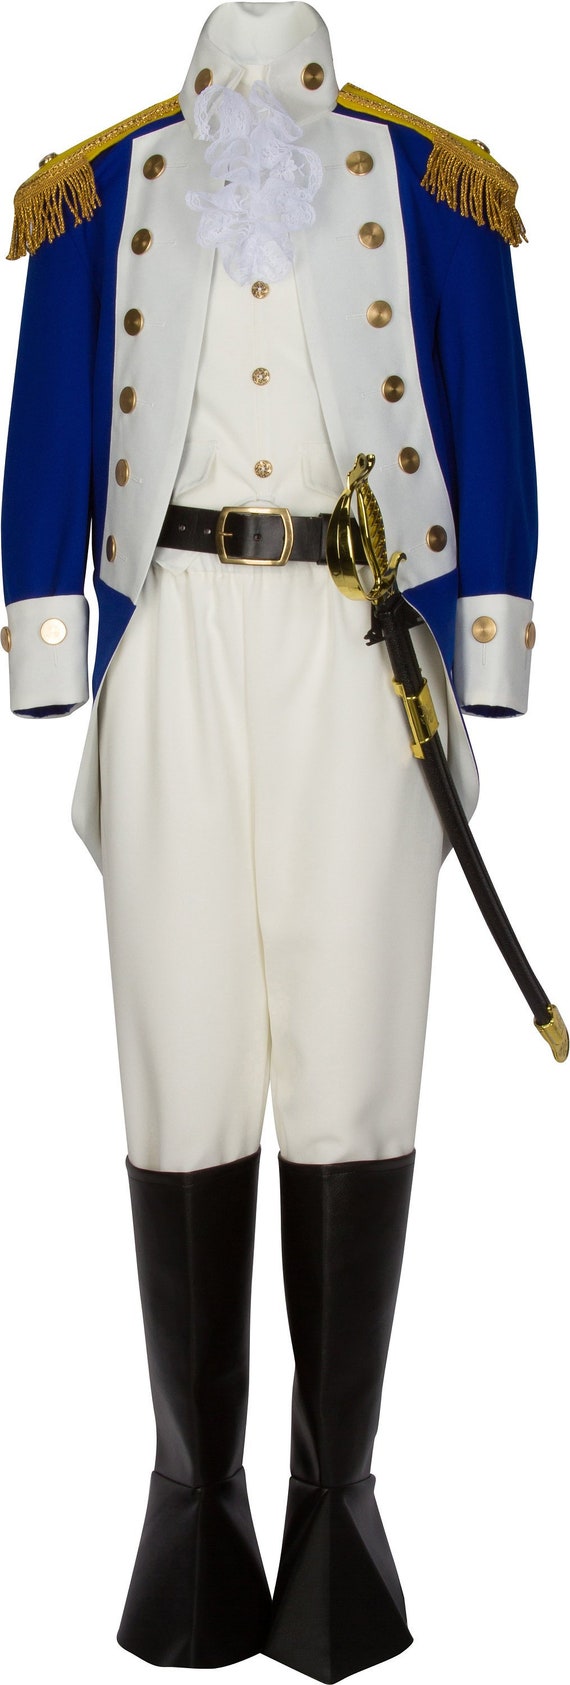 Alexander Hamilton Children's Uniform Colonial Costume - Etsy